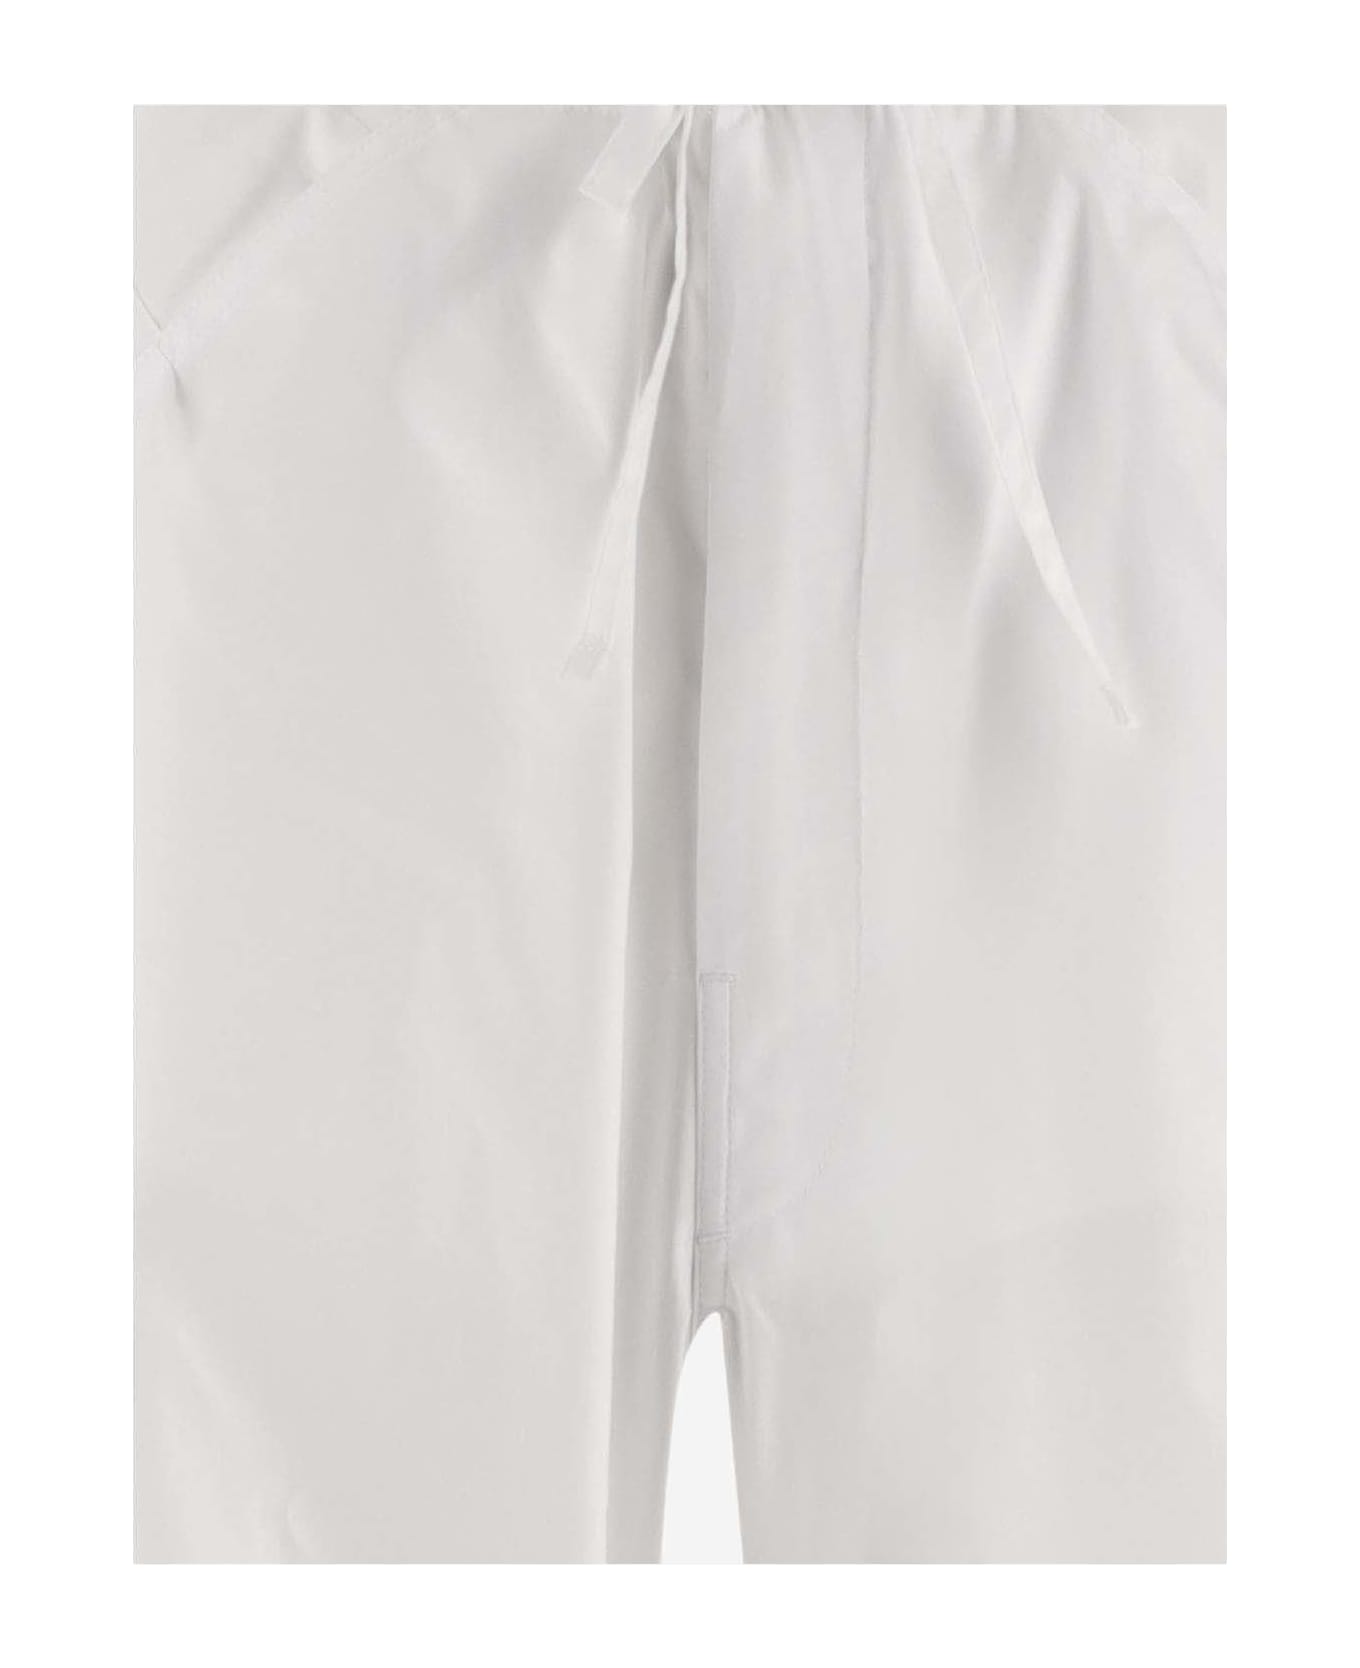 DARKPARK Cotton Pants - White